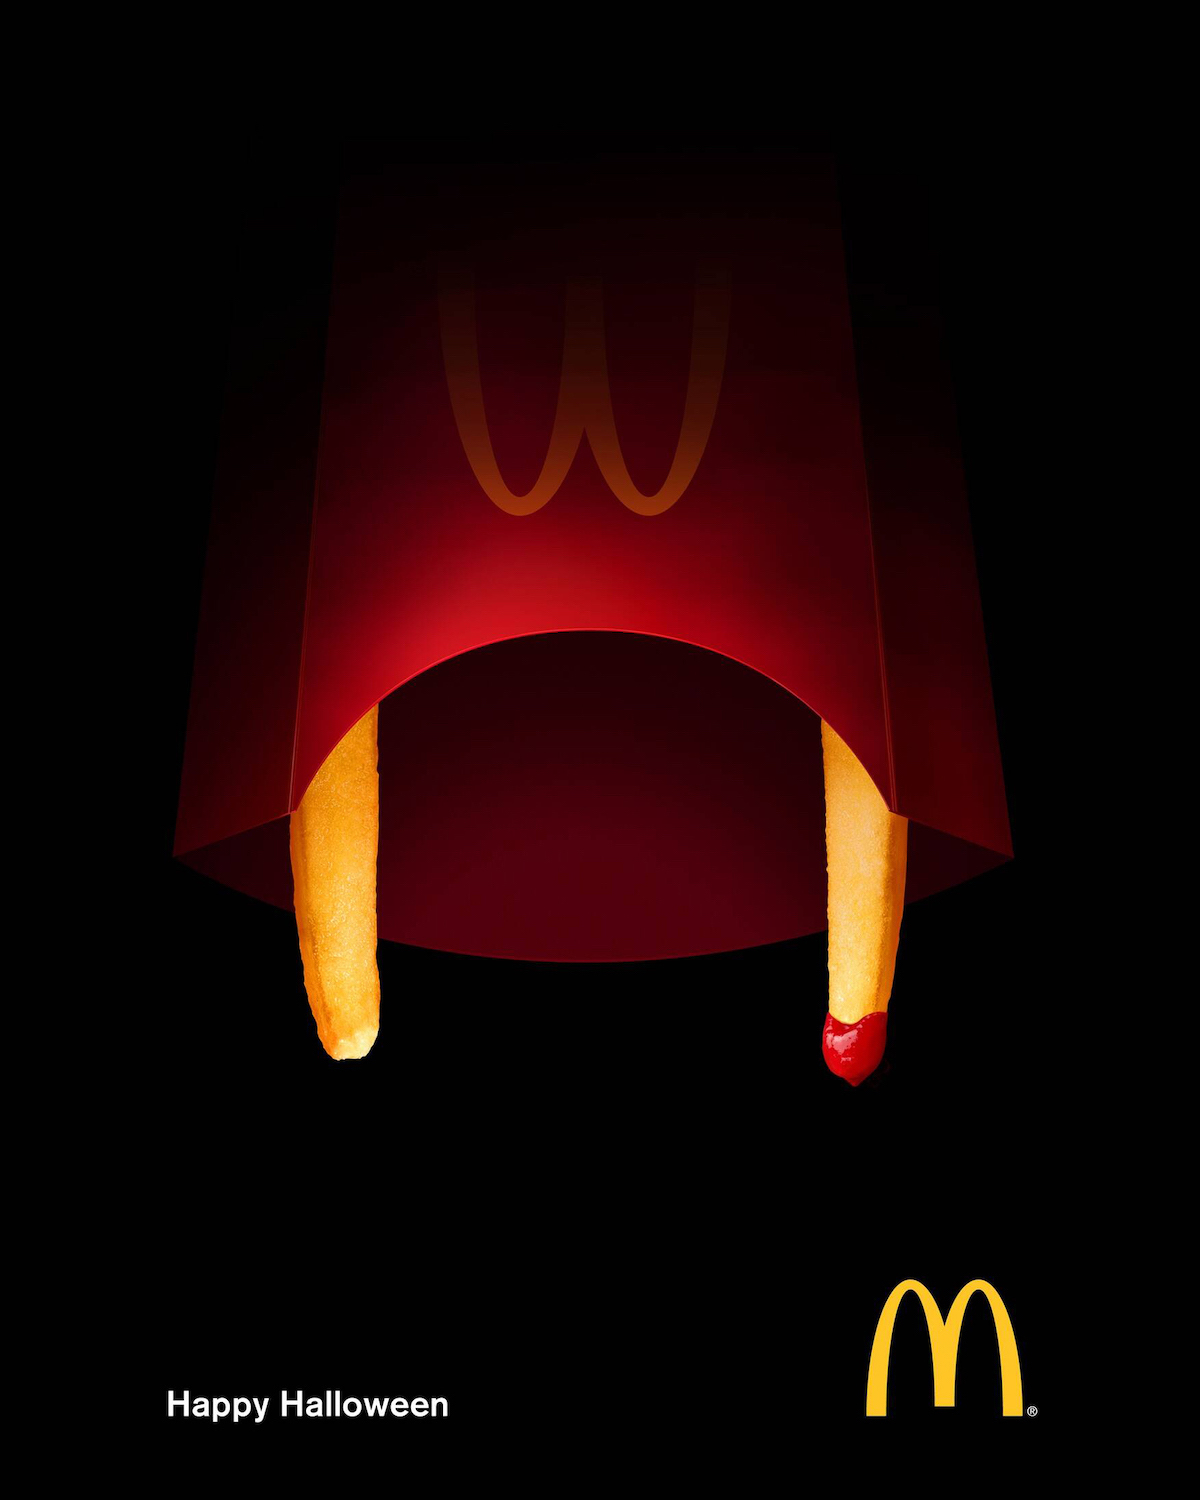 Creative Ads: McDonald's - Happy Halloween (Dracula Fries)